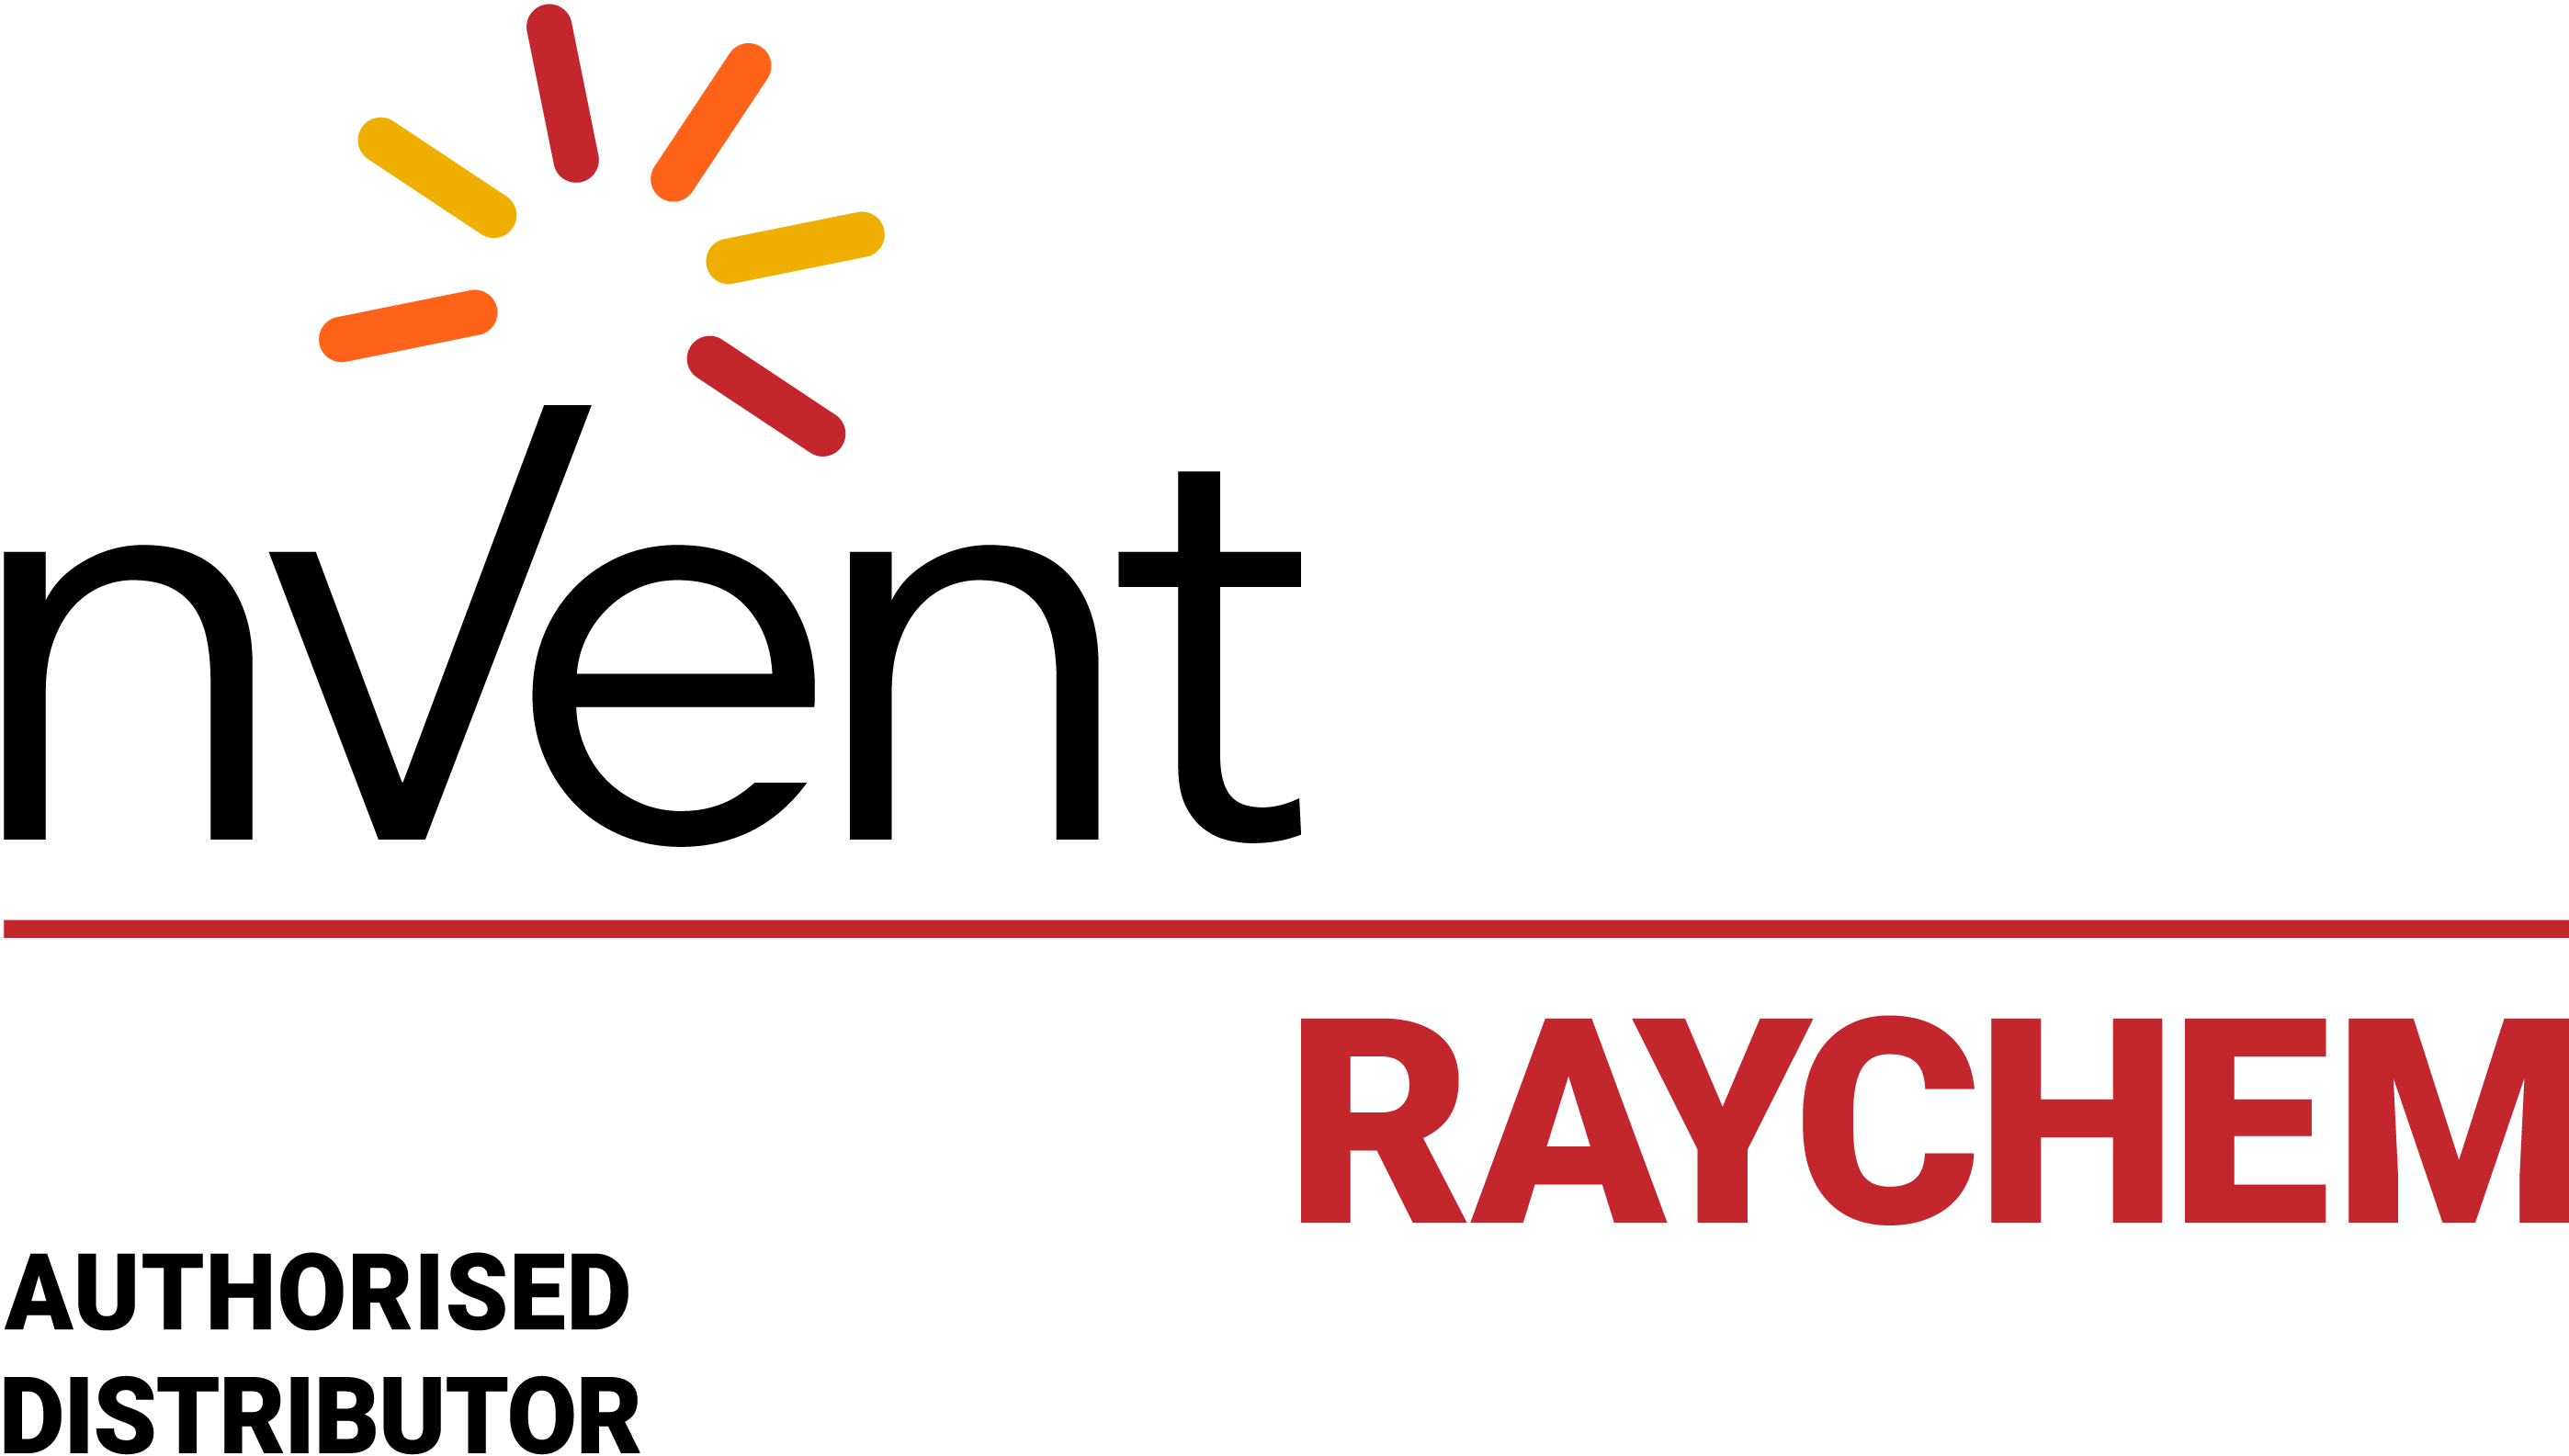 nVent Raychem authorised distributor